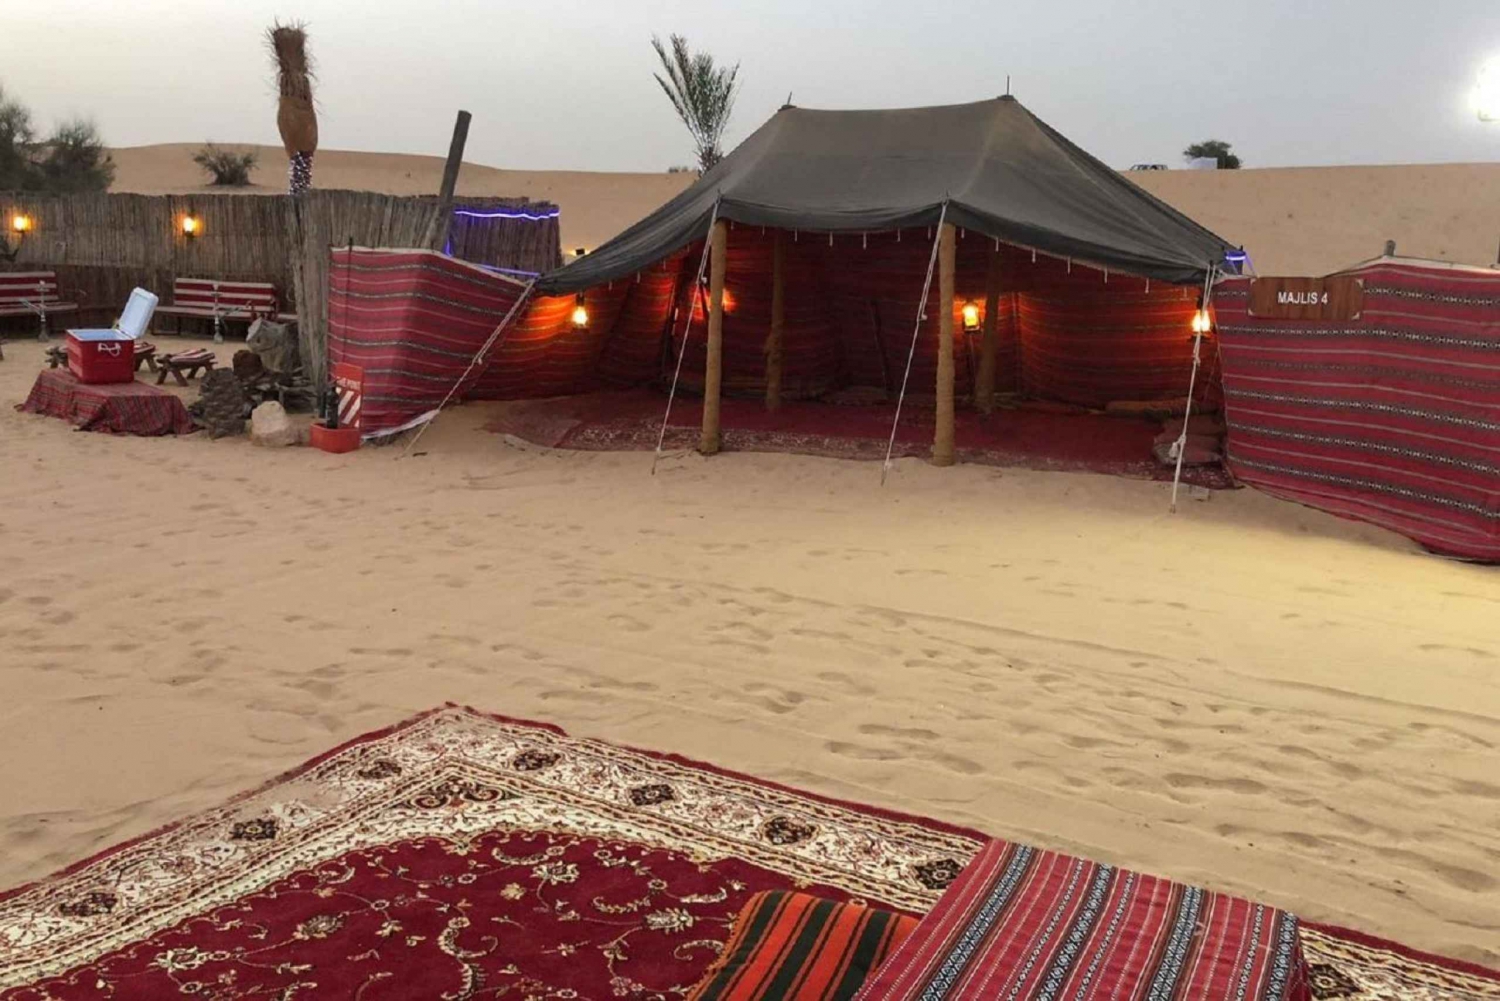 Dubai: Arabisk sanddynesafari med grillmiddag og kamelritt